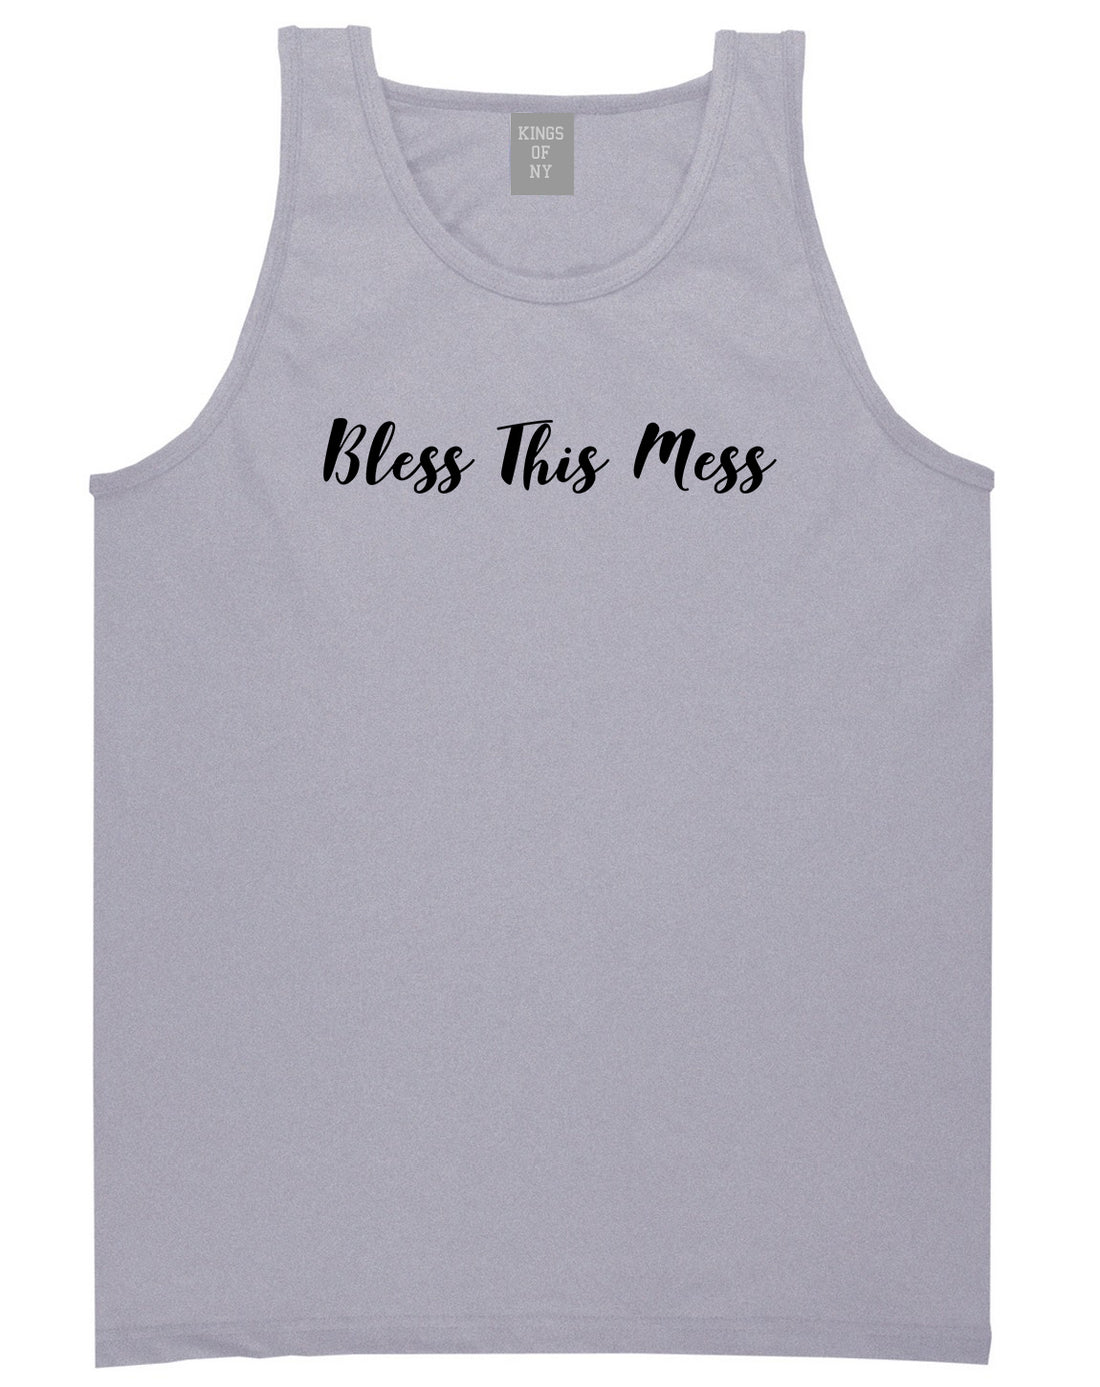 Bless This Mess Grey Tank Top Shirt by Kings Of NY